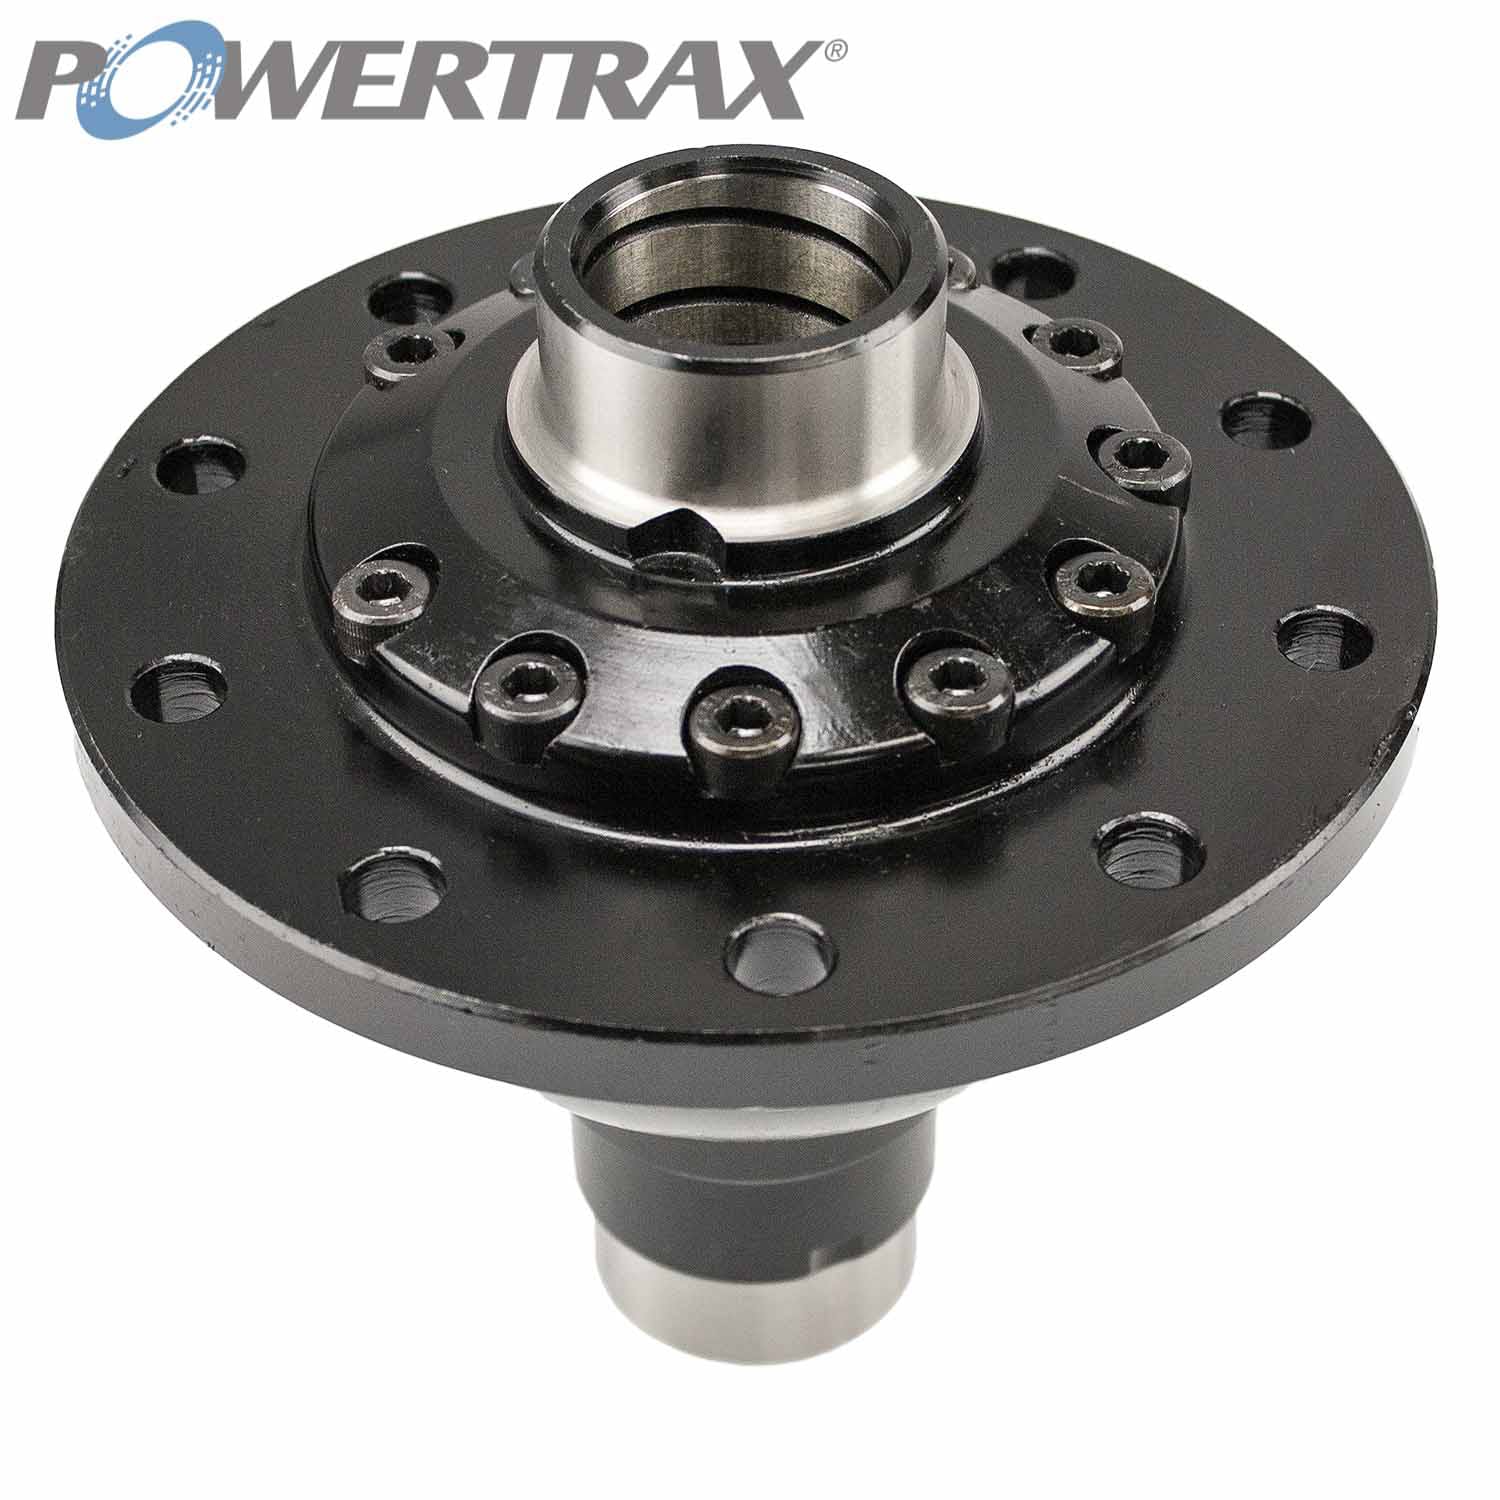 PowerTrax GT109035-45 Powertrax - Grip PRO Traction System